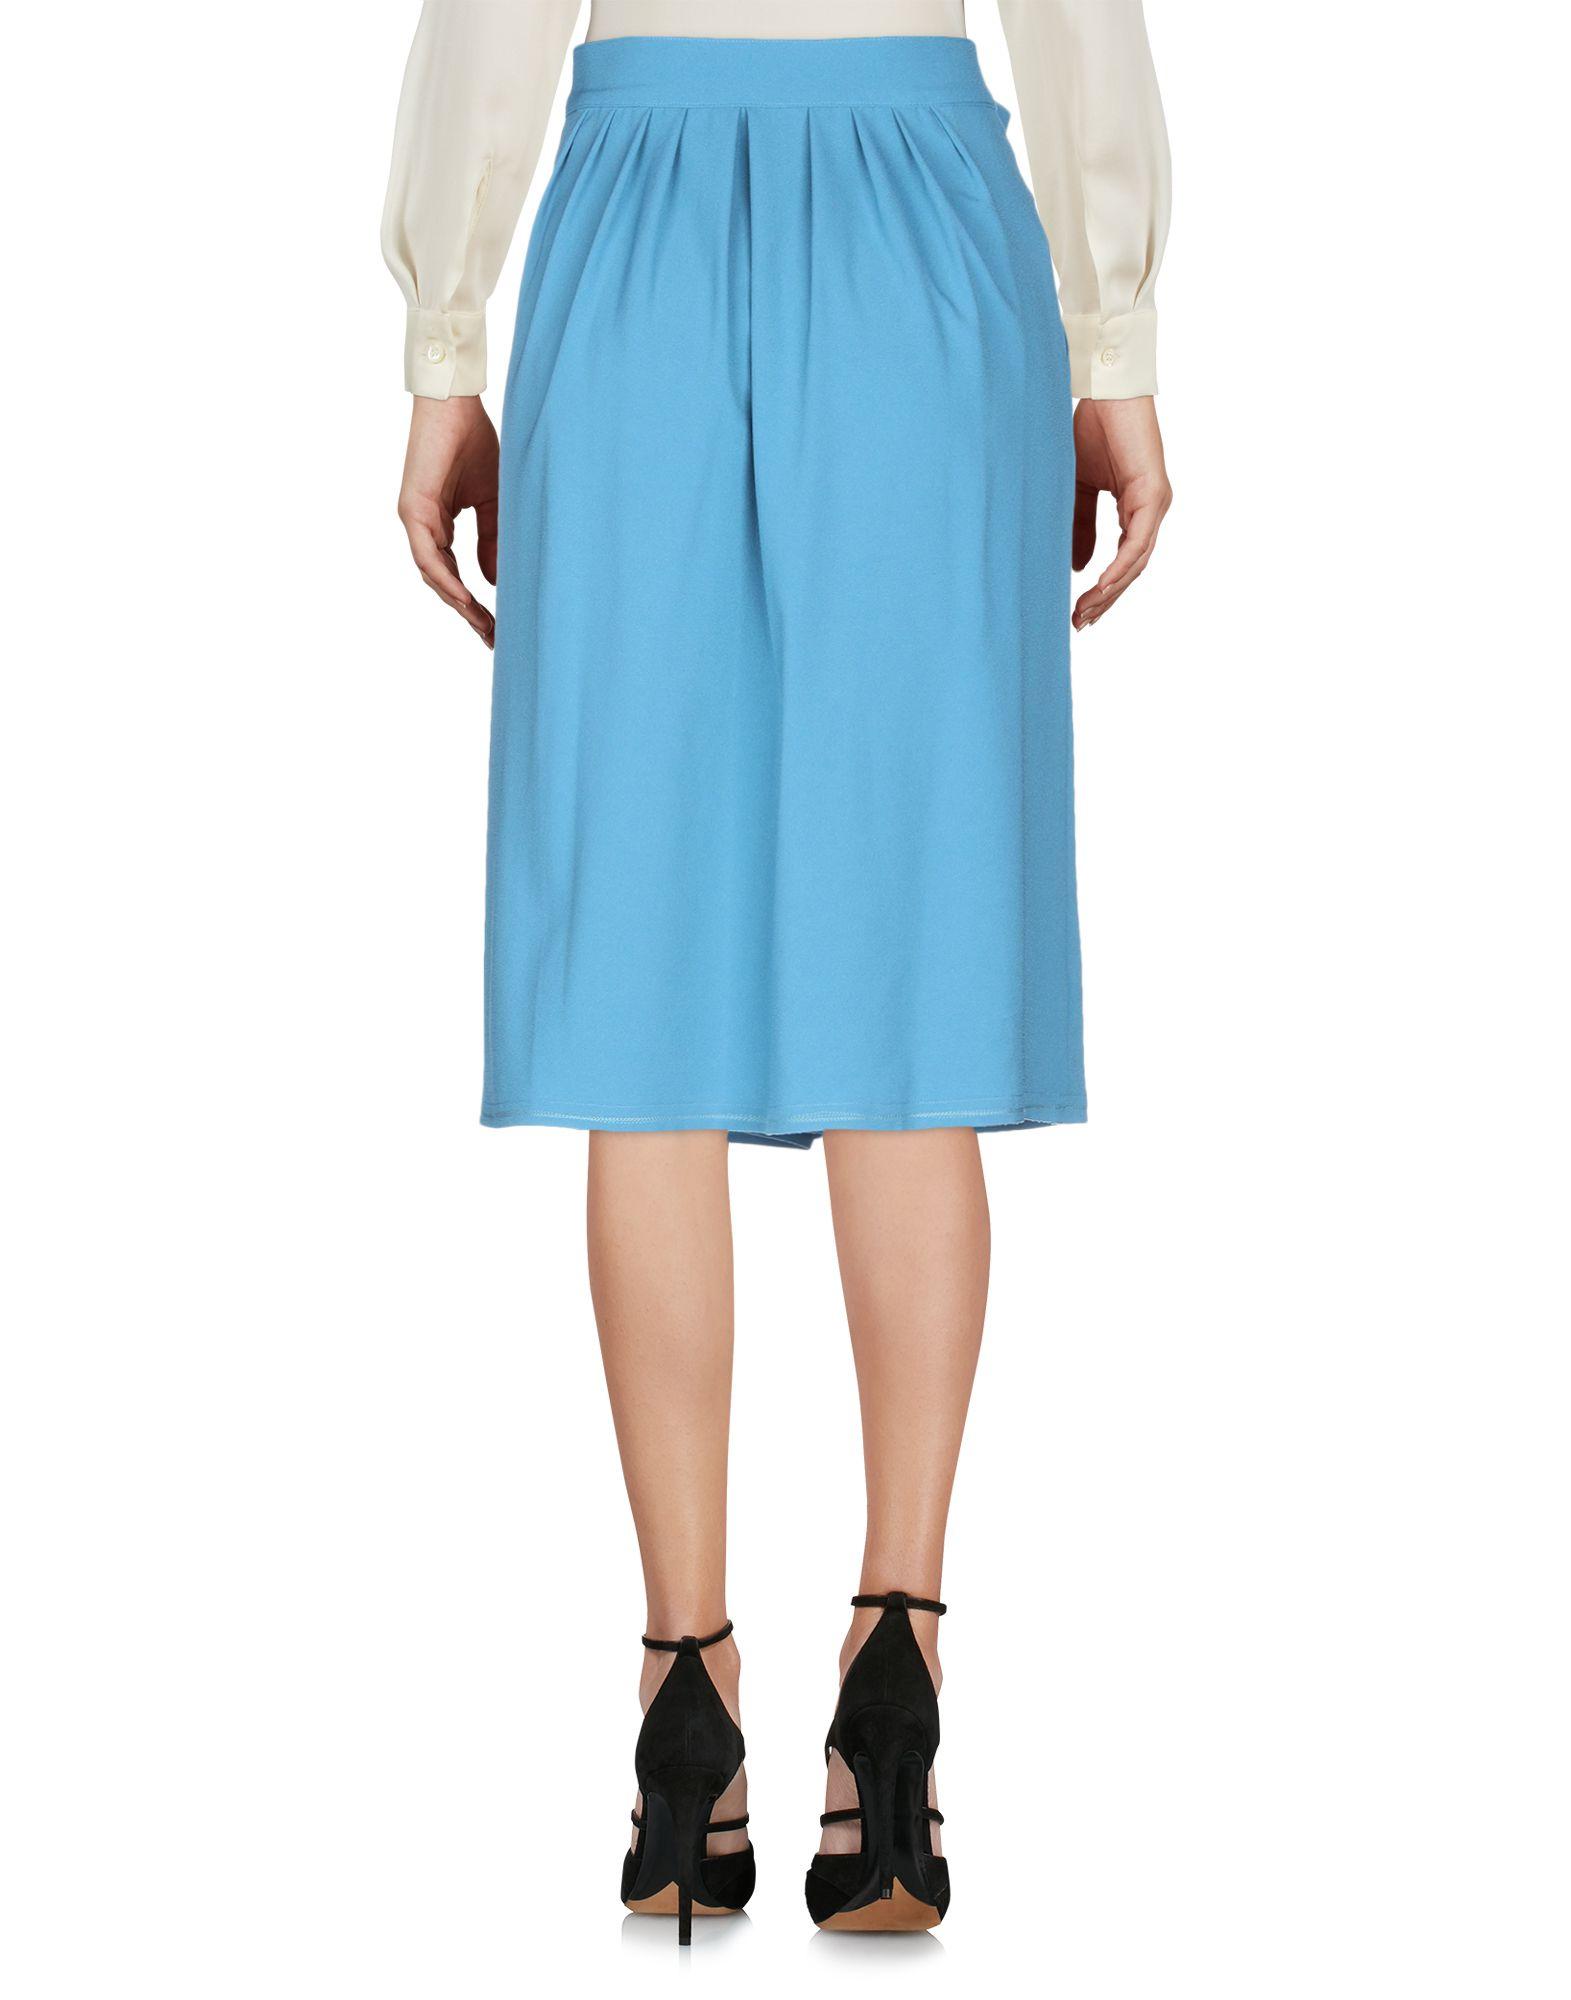 Department 5 Synthetic Knee Length Skirt in Slate Blue (Blue) - Lyst